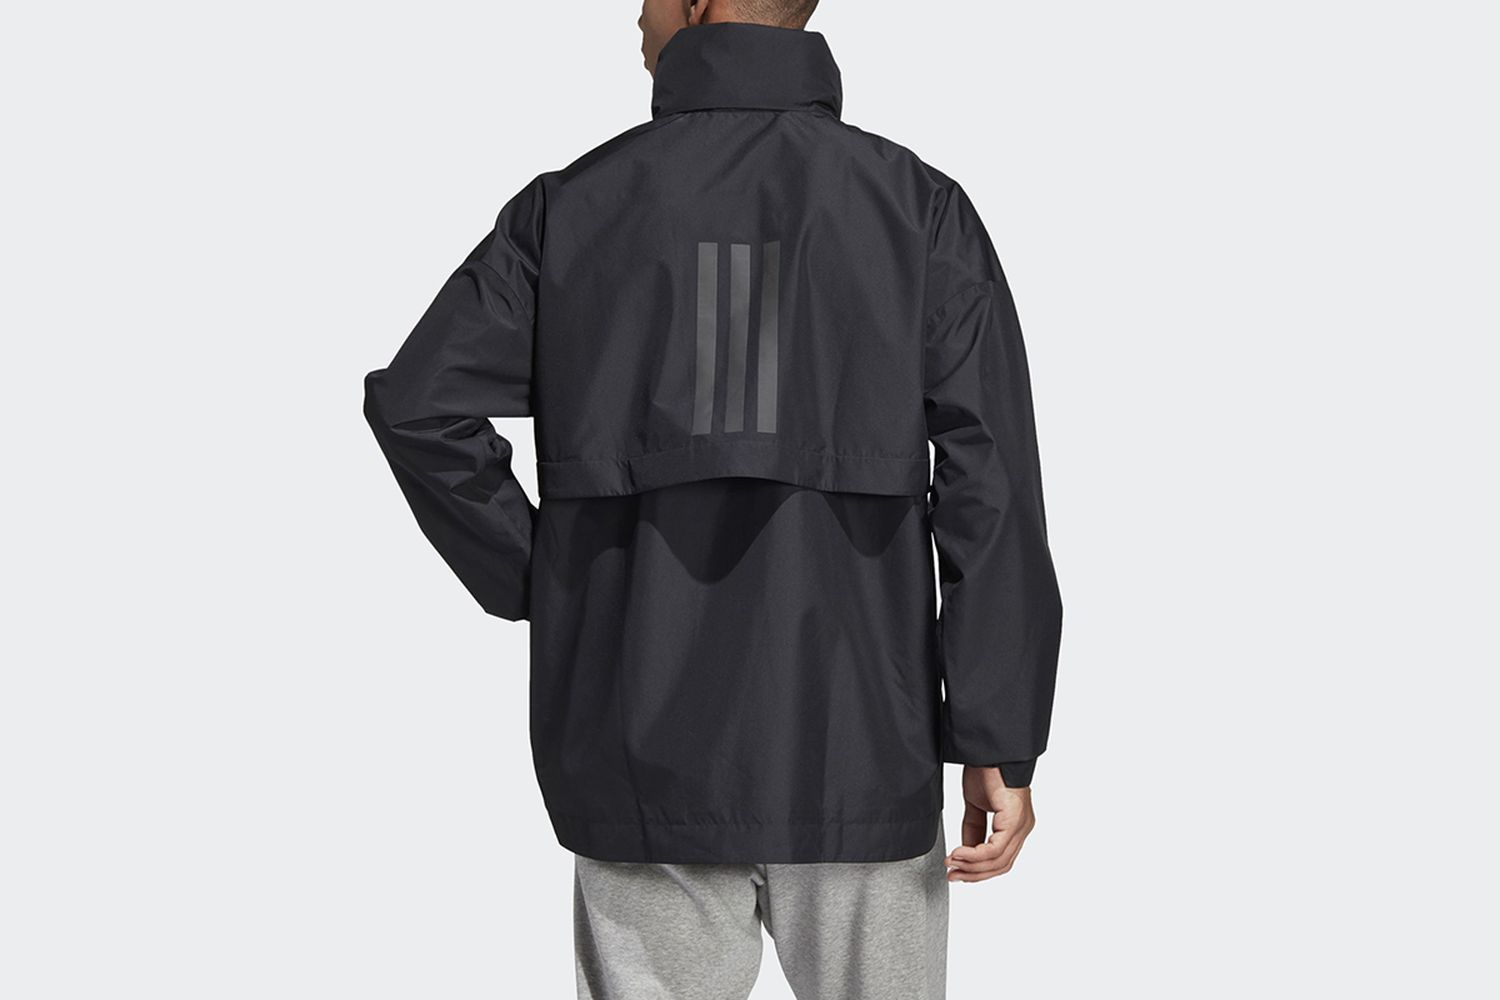 Urban Climaproof Rain Jacket